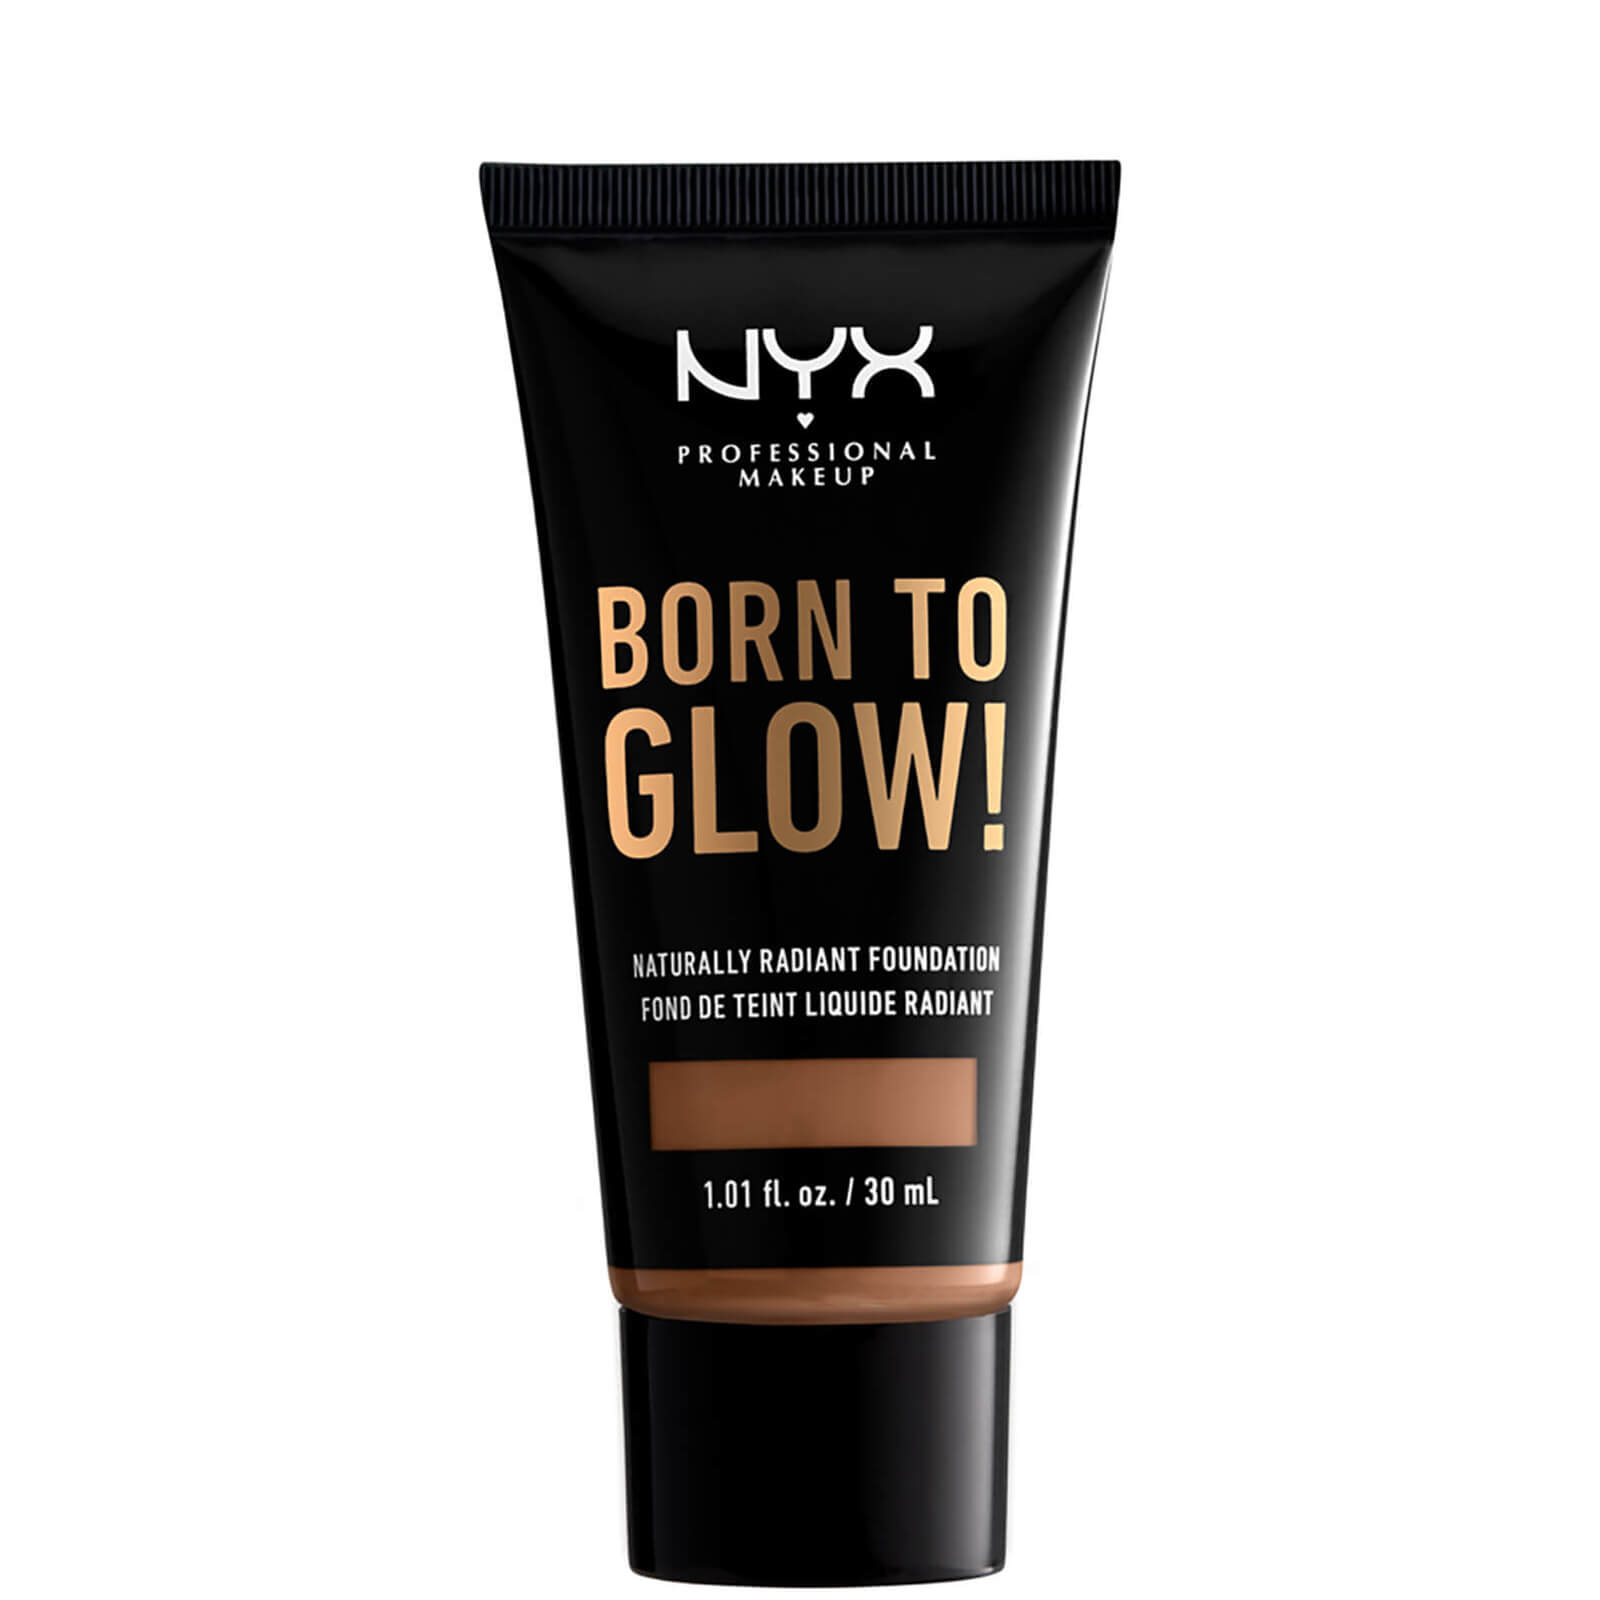 NYX Professional Makeup Born to Glow Naturally Radiant Foundation 30ml (Various Shades) - Warm Caramel